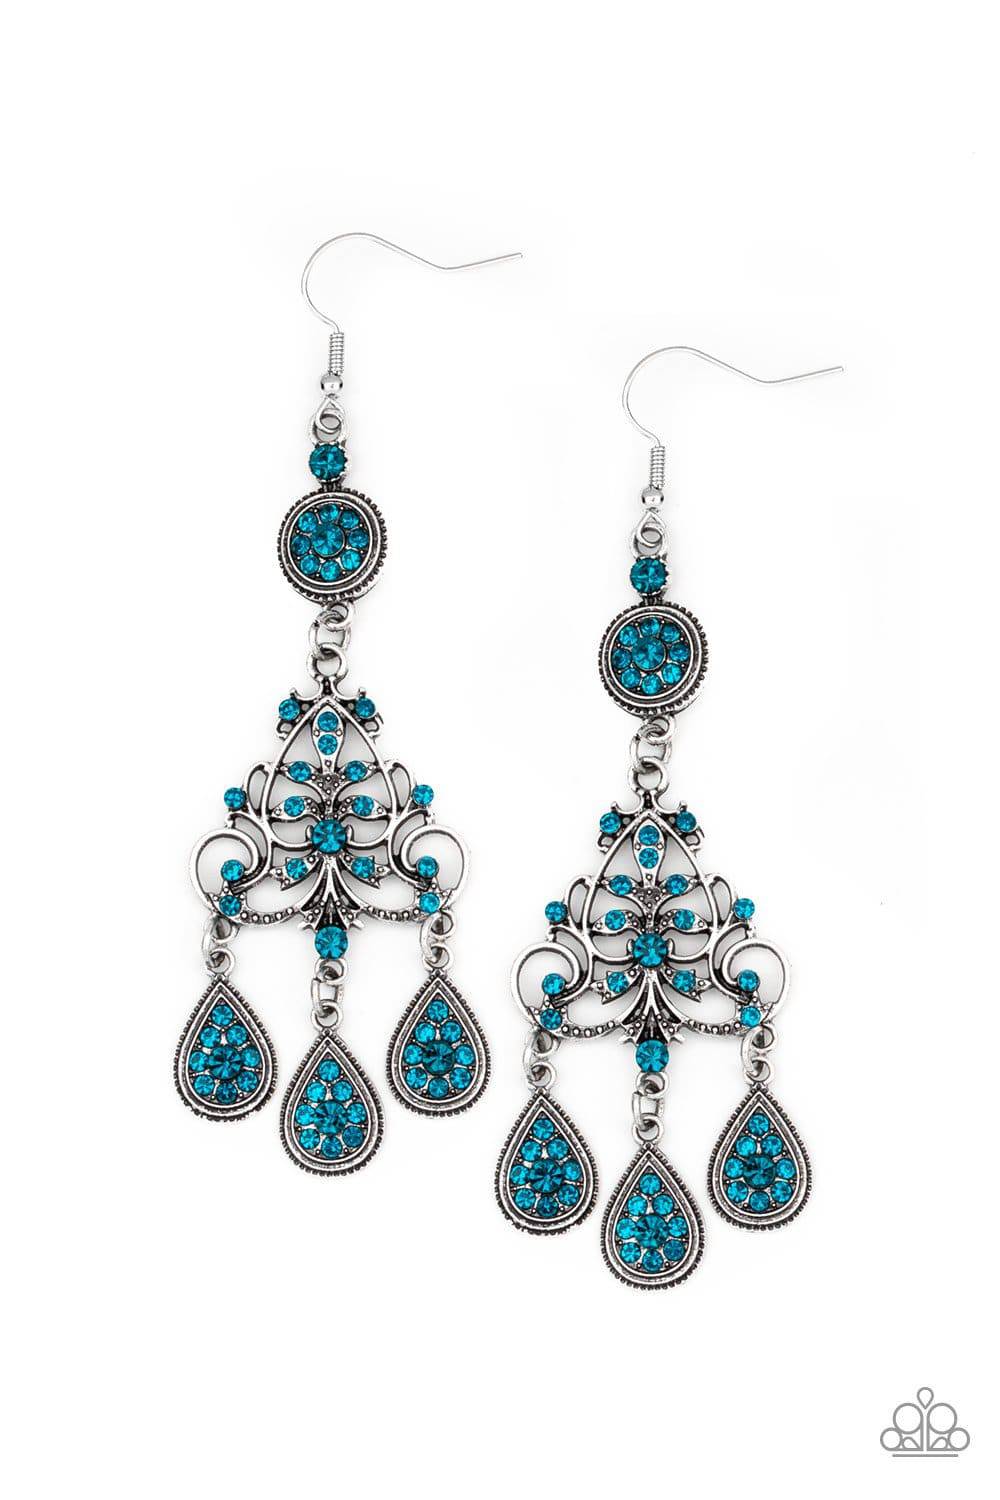 Royal Renovation - Blue Rhinestone Earrings - Paparazzi Accessories - GlaMarous Titi Jewels